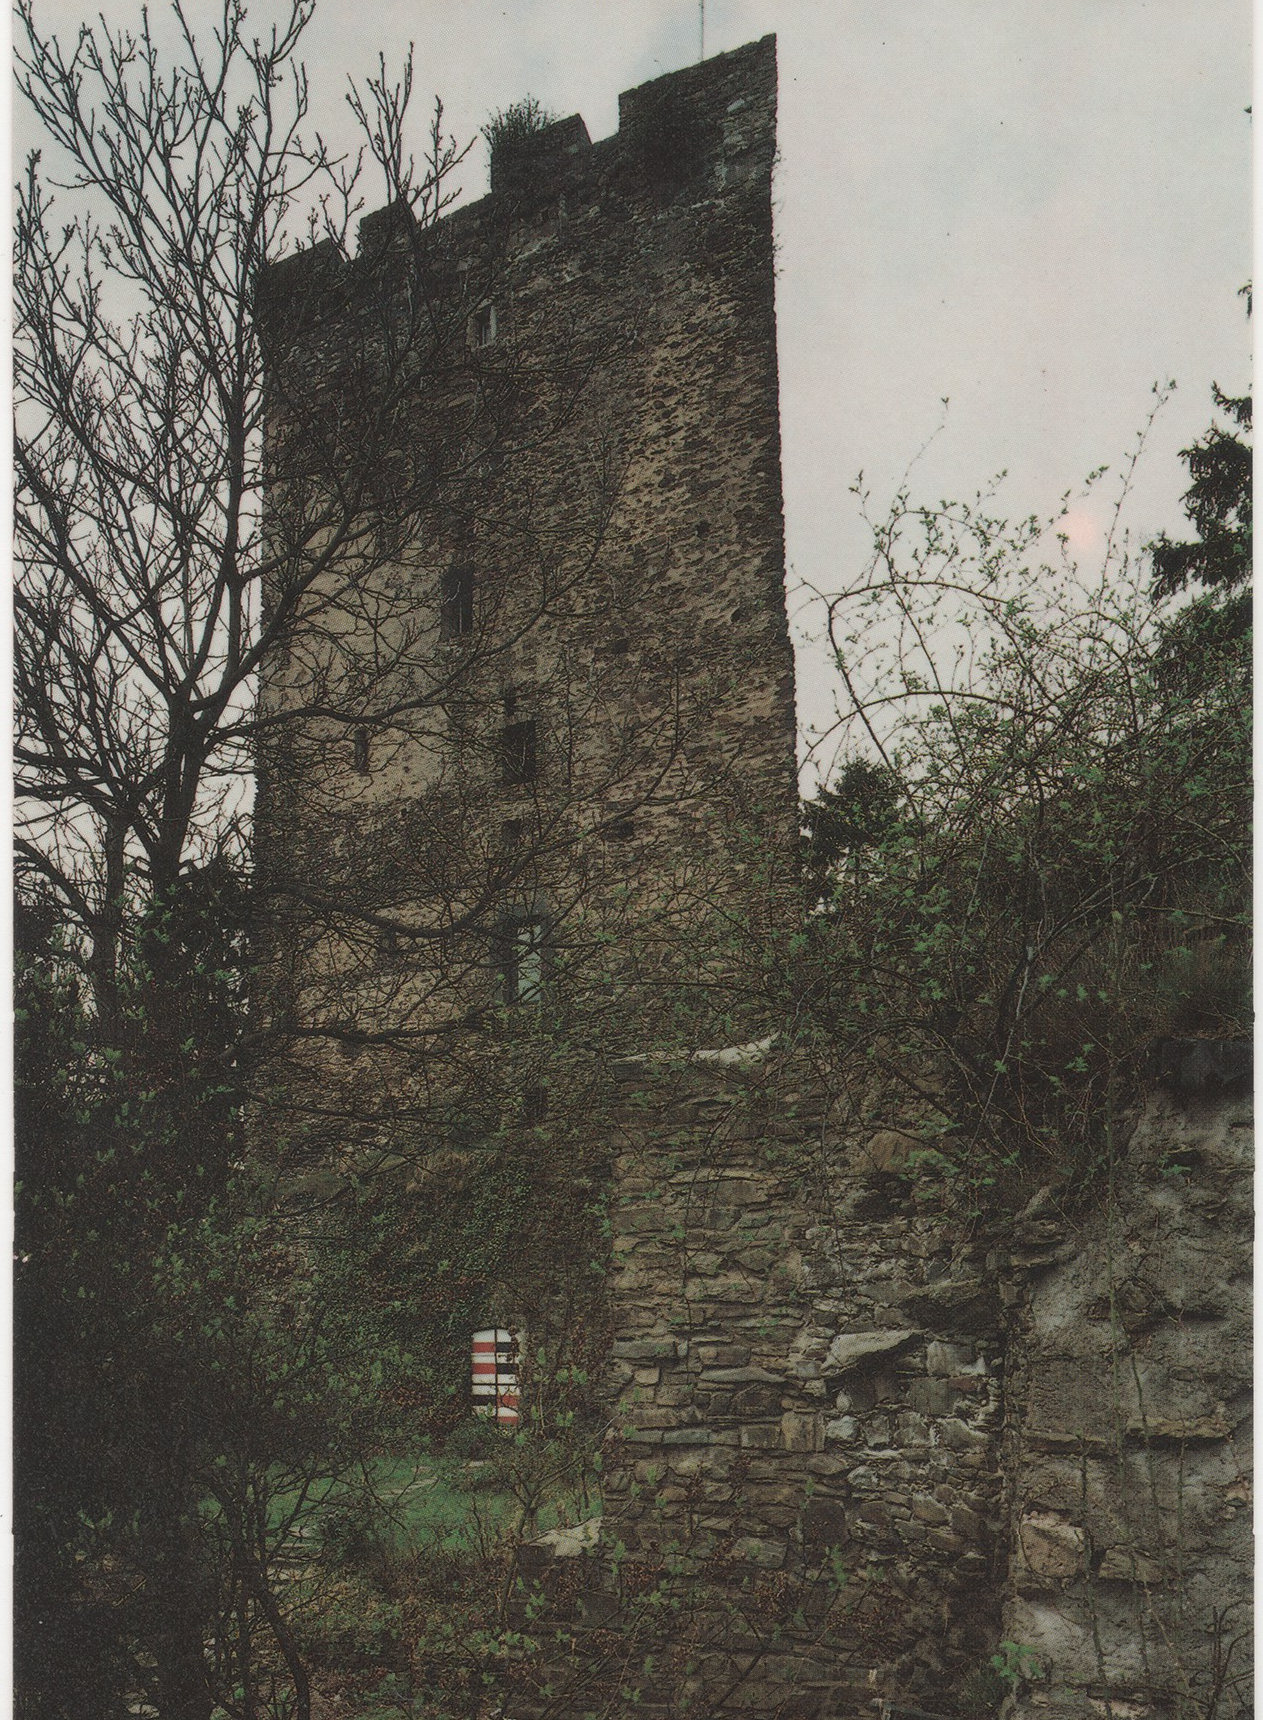 Turm vom Innenhof her